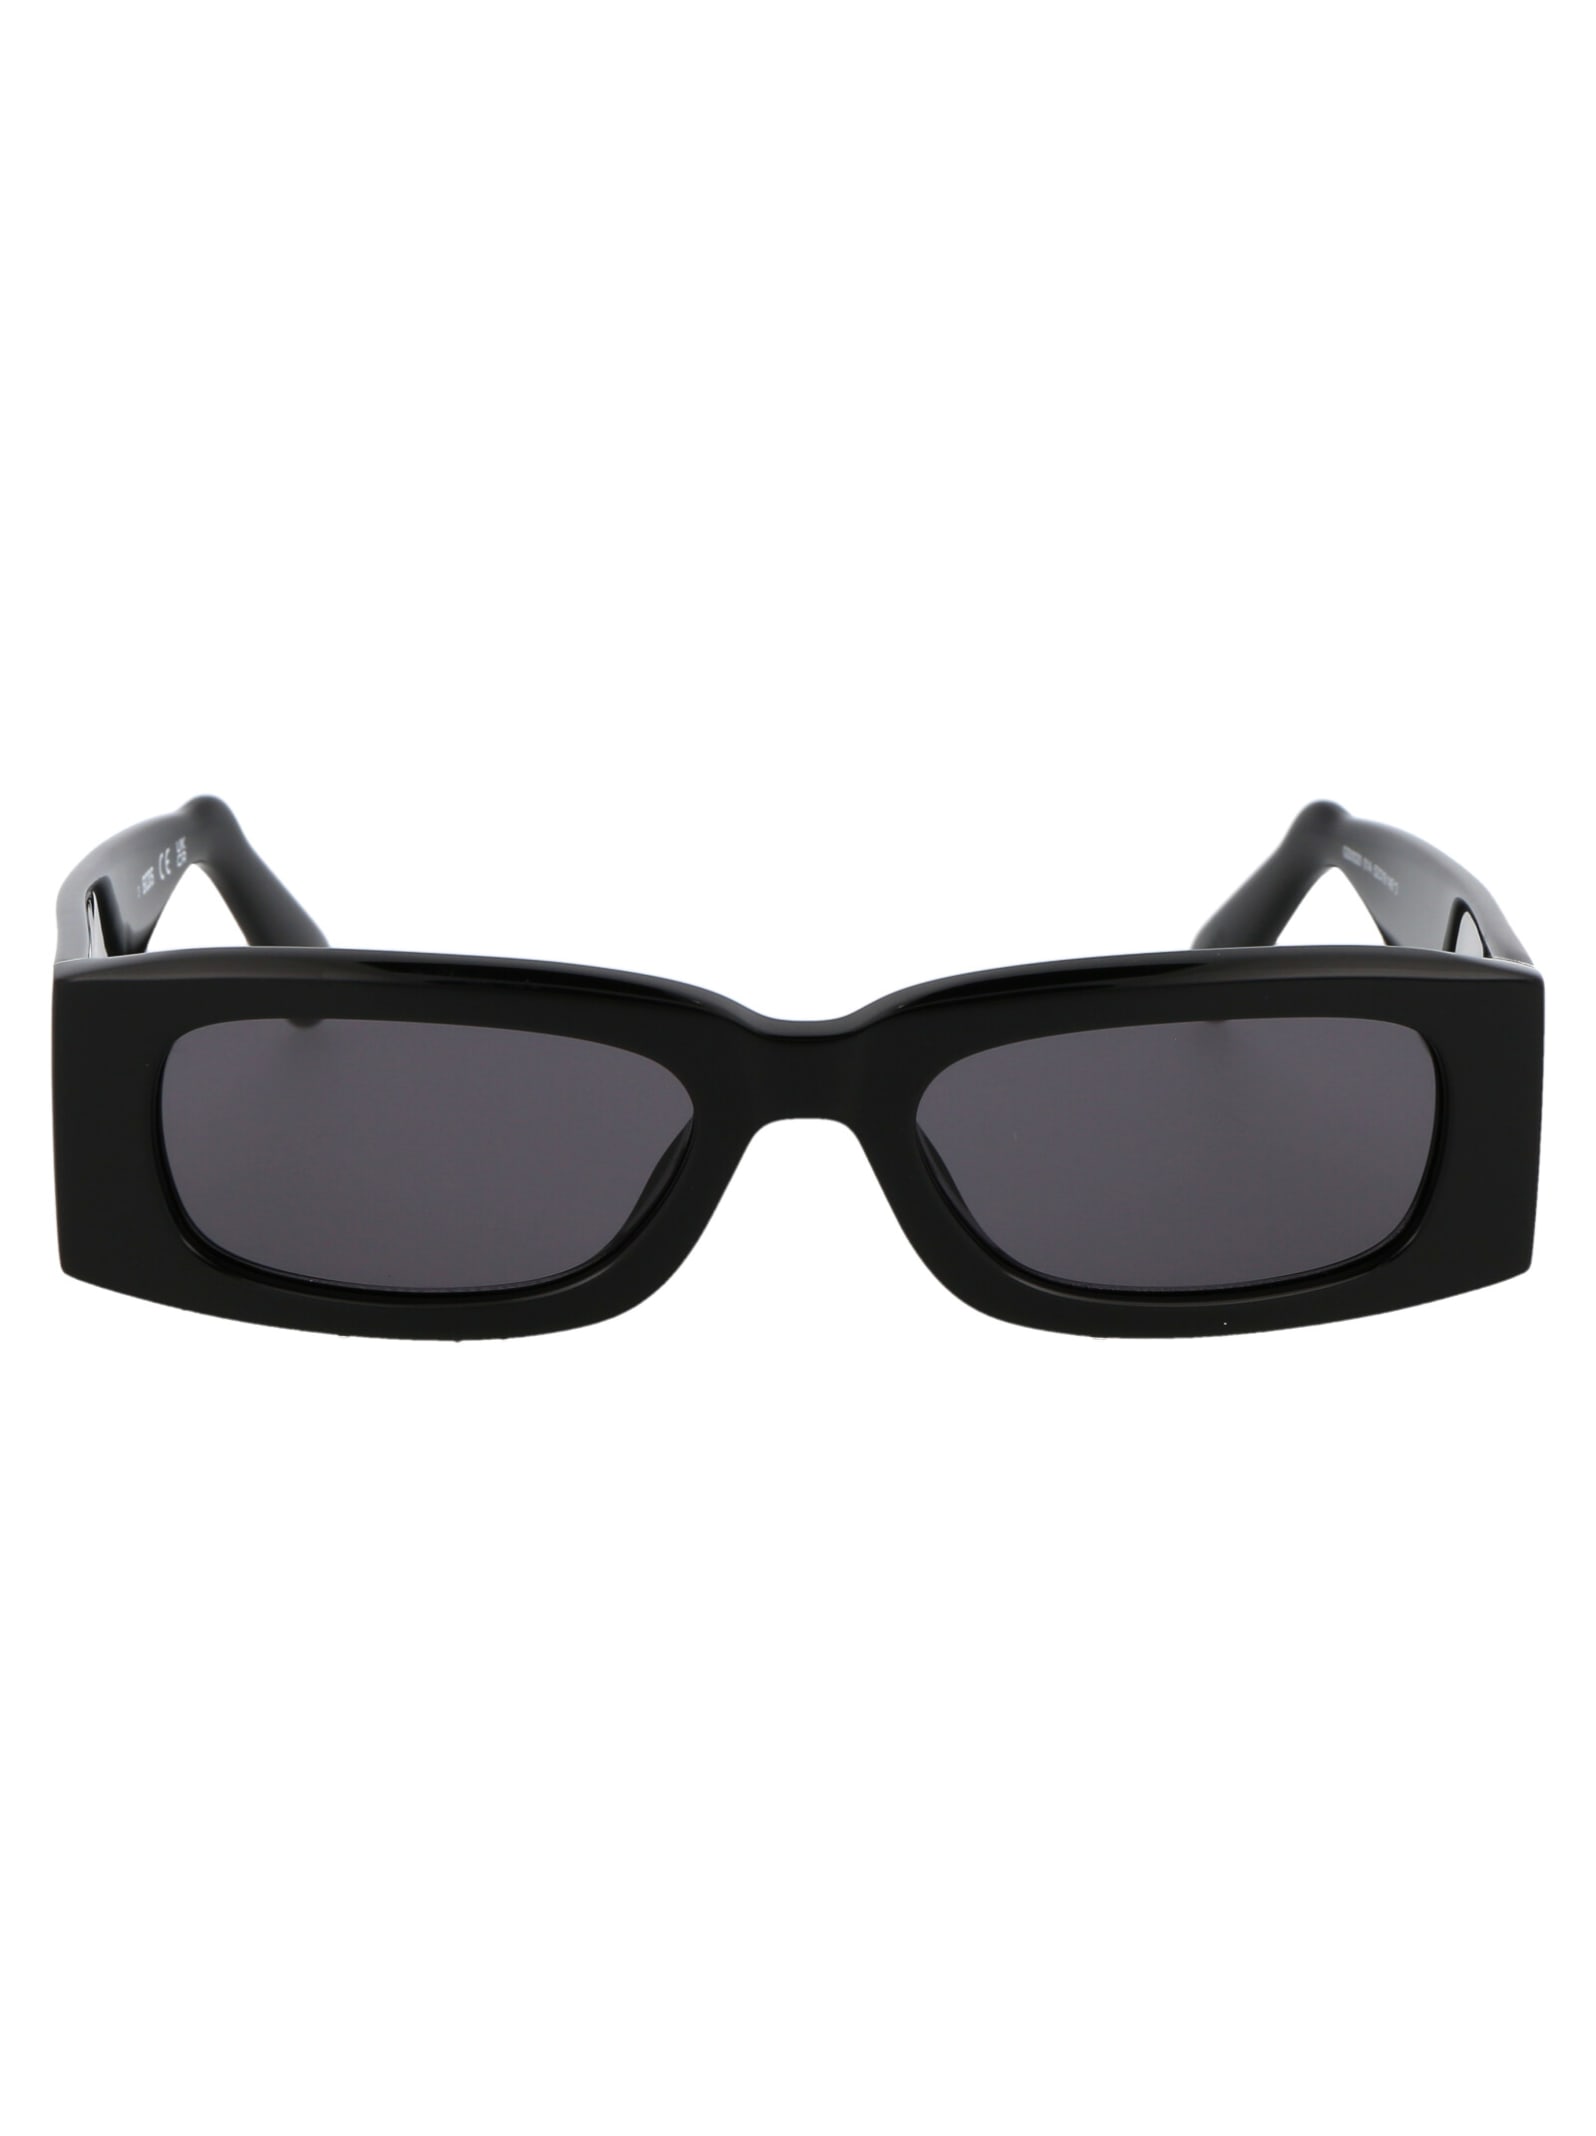 Gd0020 Sunglasses